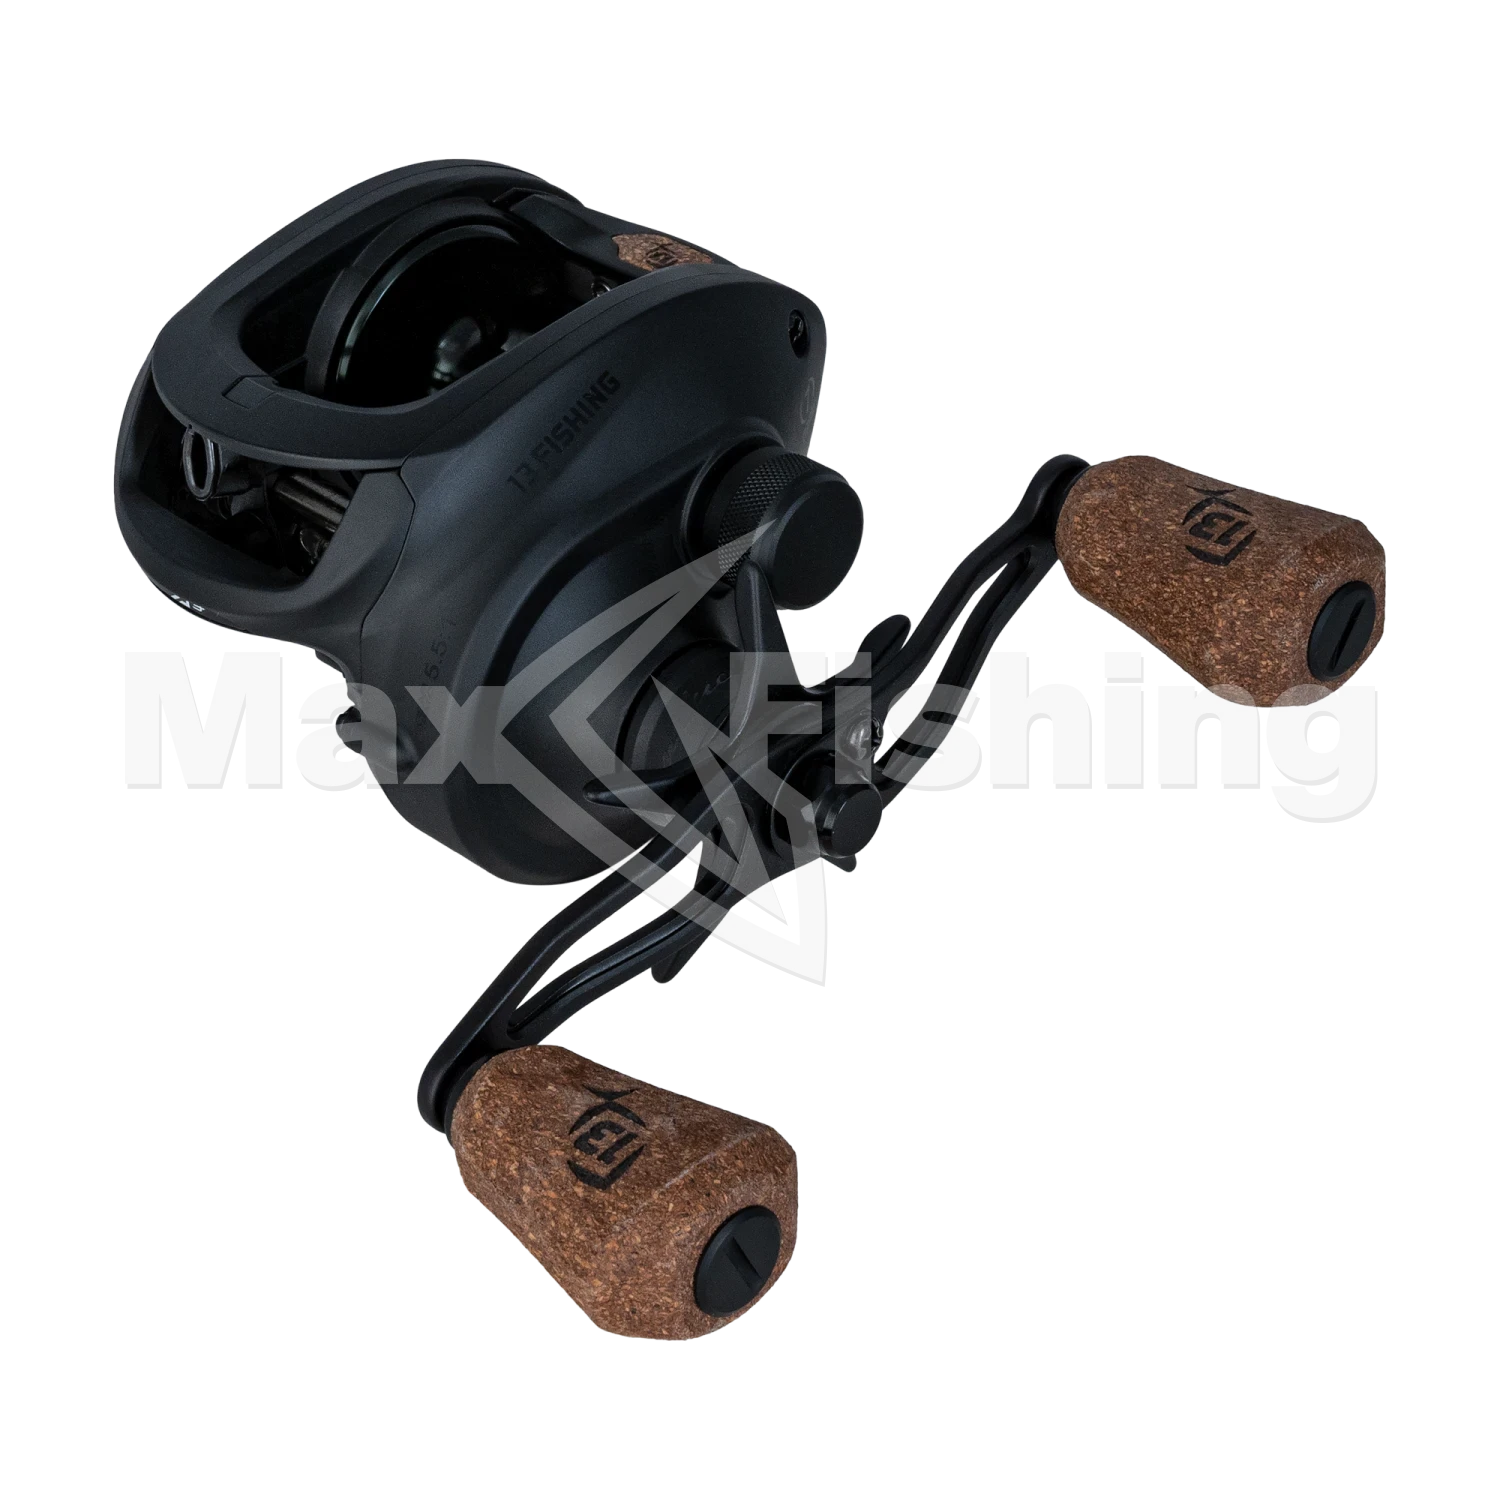 Катушка мультипликаторная 13 Fishing Concept A3 Casting Reel 6.3-LH